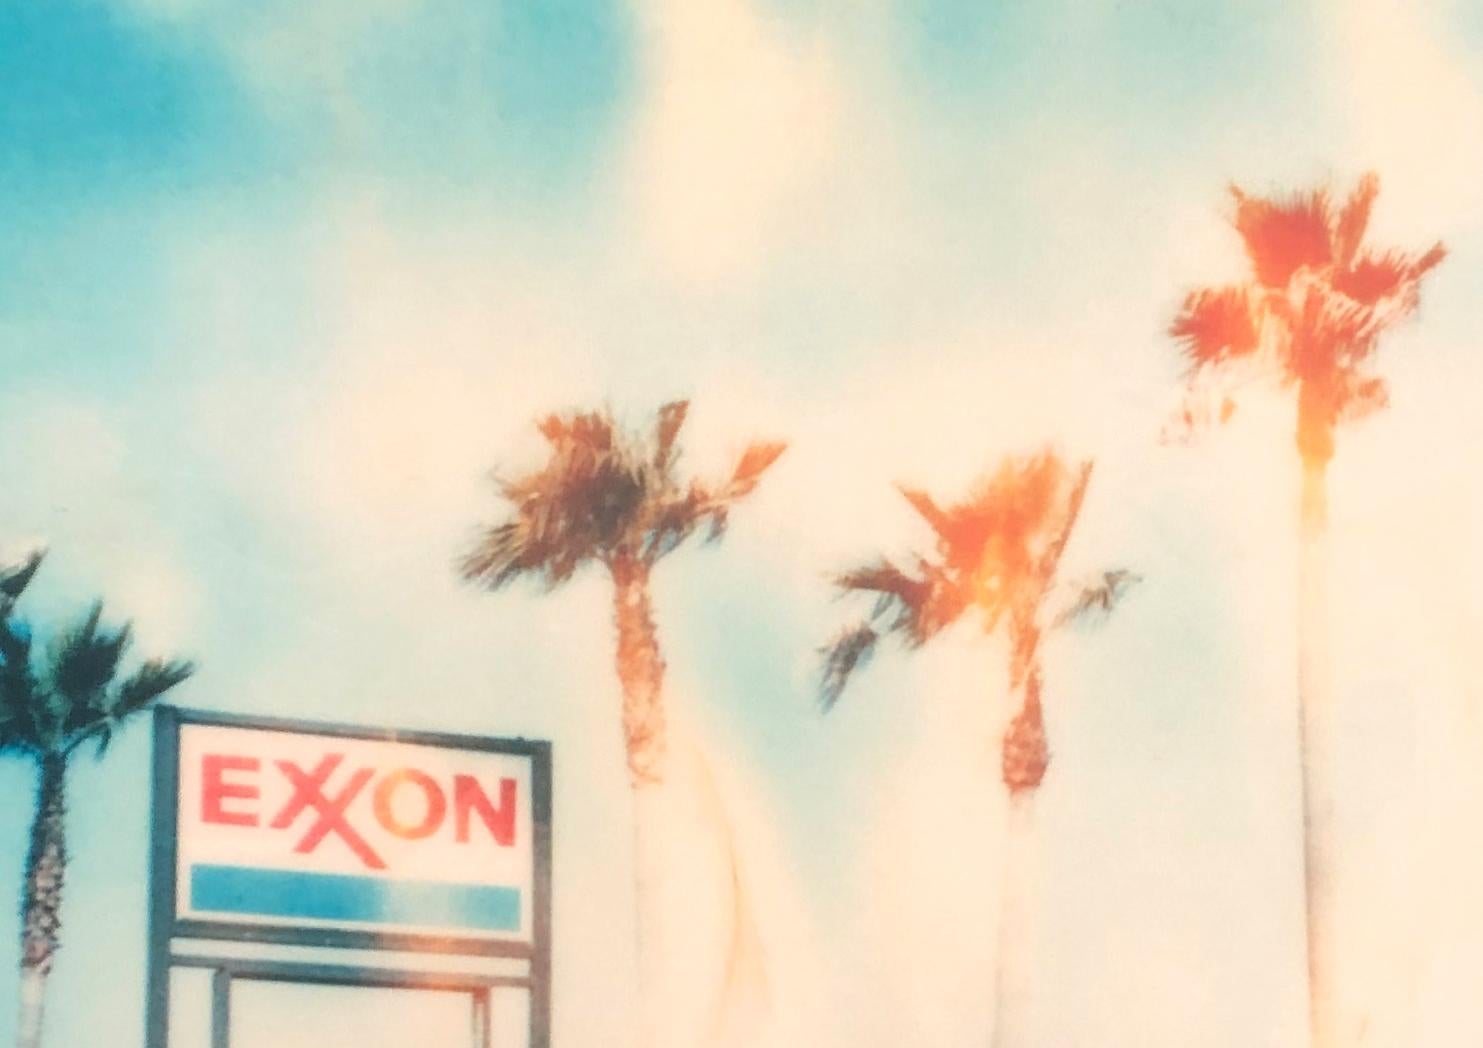 Exxon - analog - mounted - Landscape, USA, Polaroid, Land, Color, photograph - Photograph by Stefanie Schneider